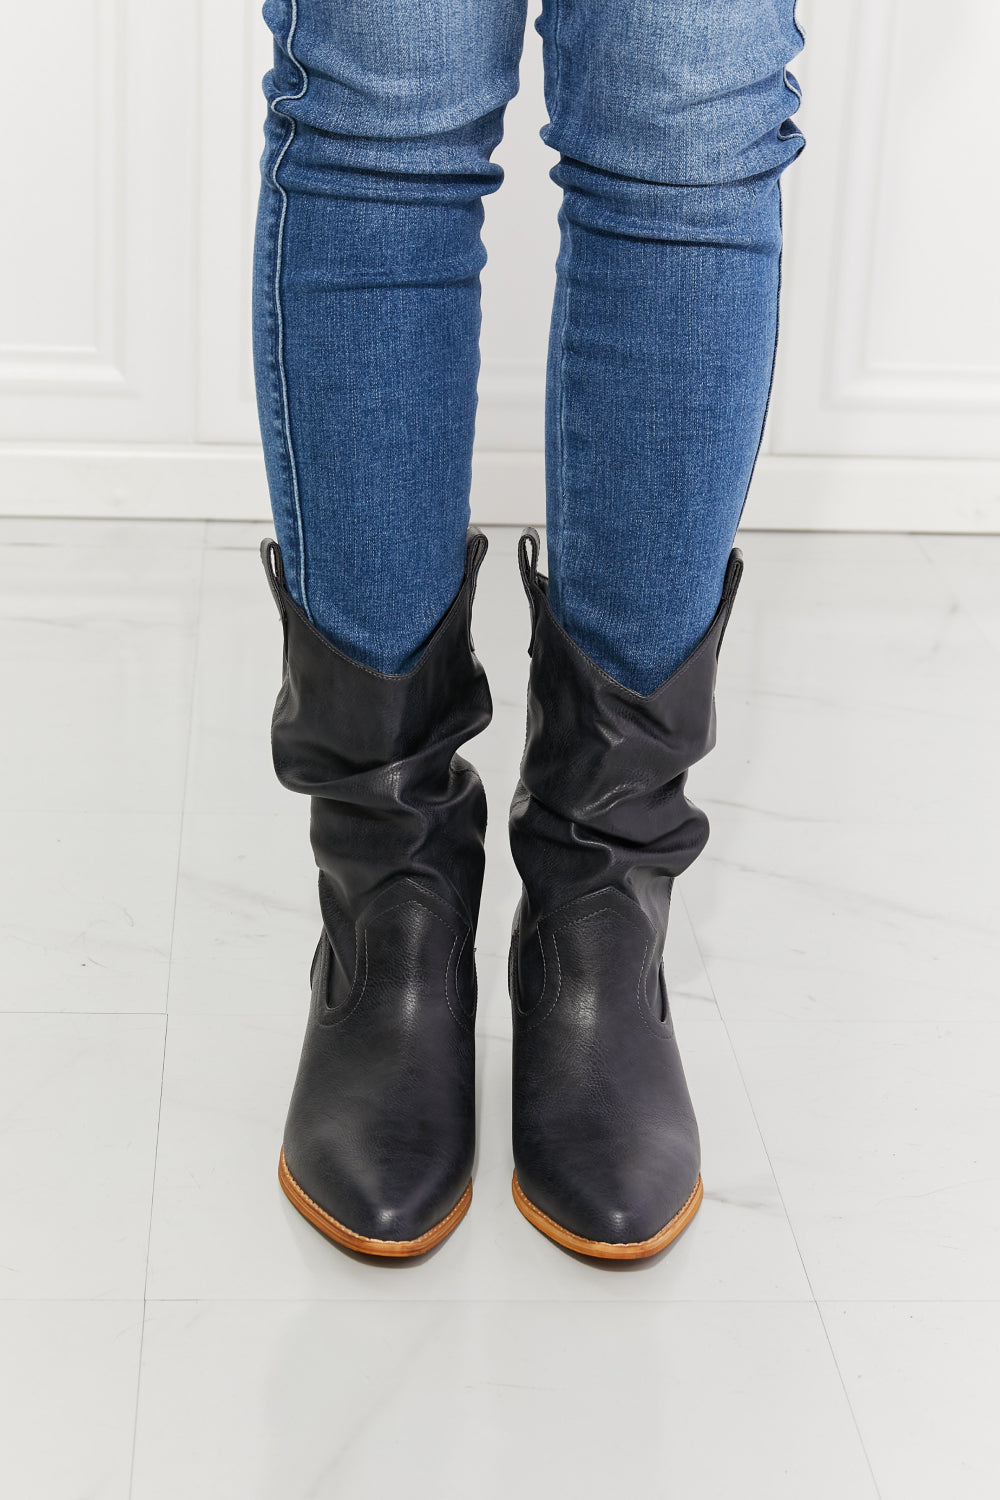 Women's Scrunch Cowboy Boots in Navy - Tigbul's Fashion